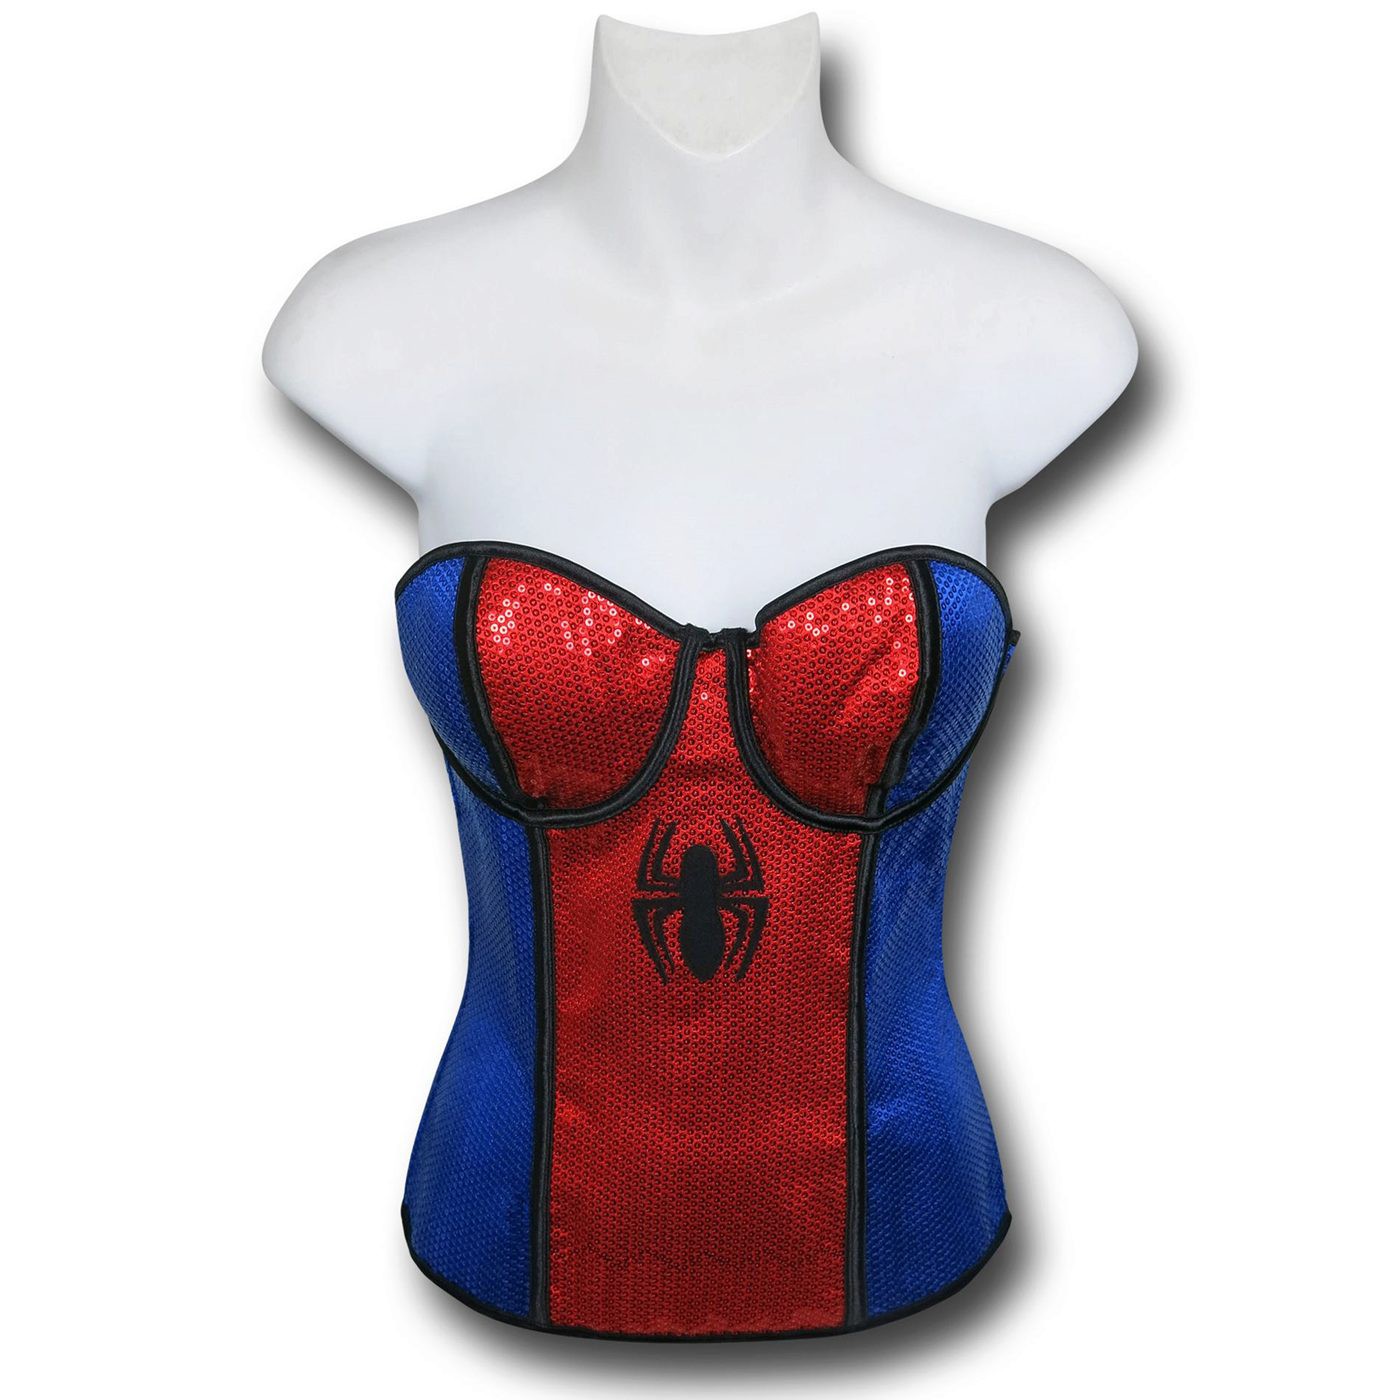 Spider-Girl Costume Sequin Corset